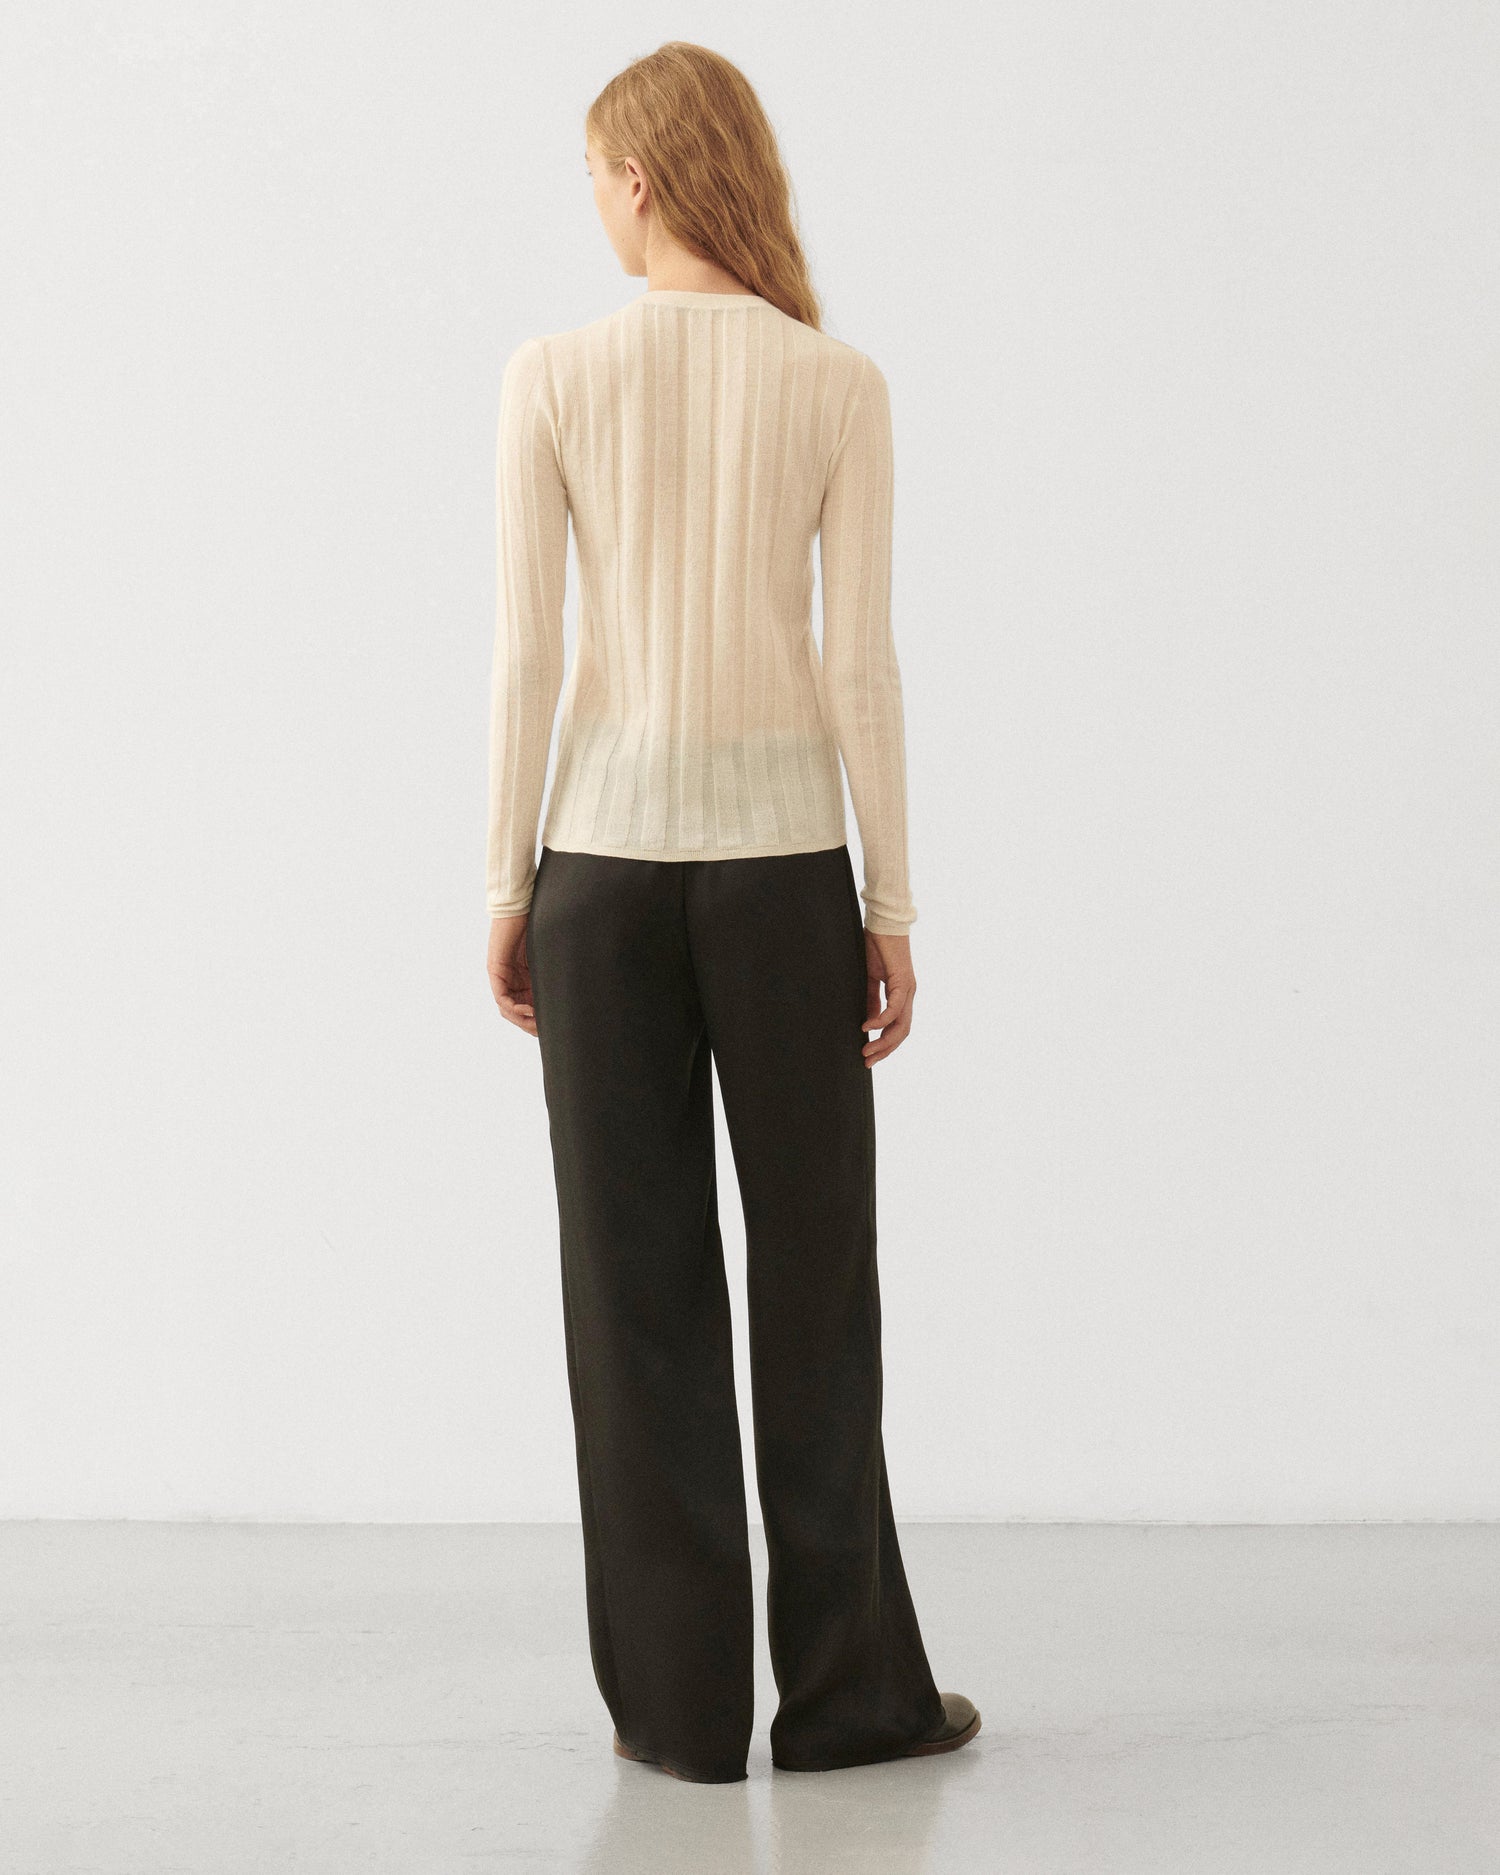 Maya Sweater in Cashmere, Ivory